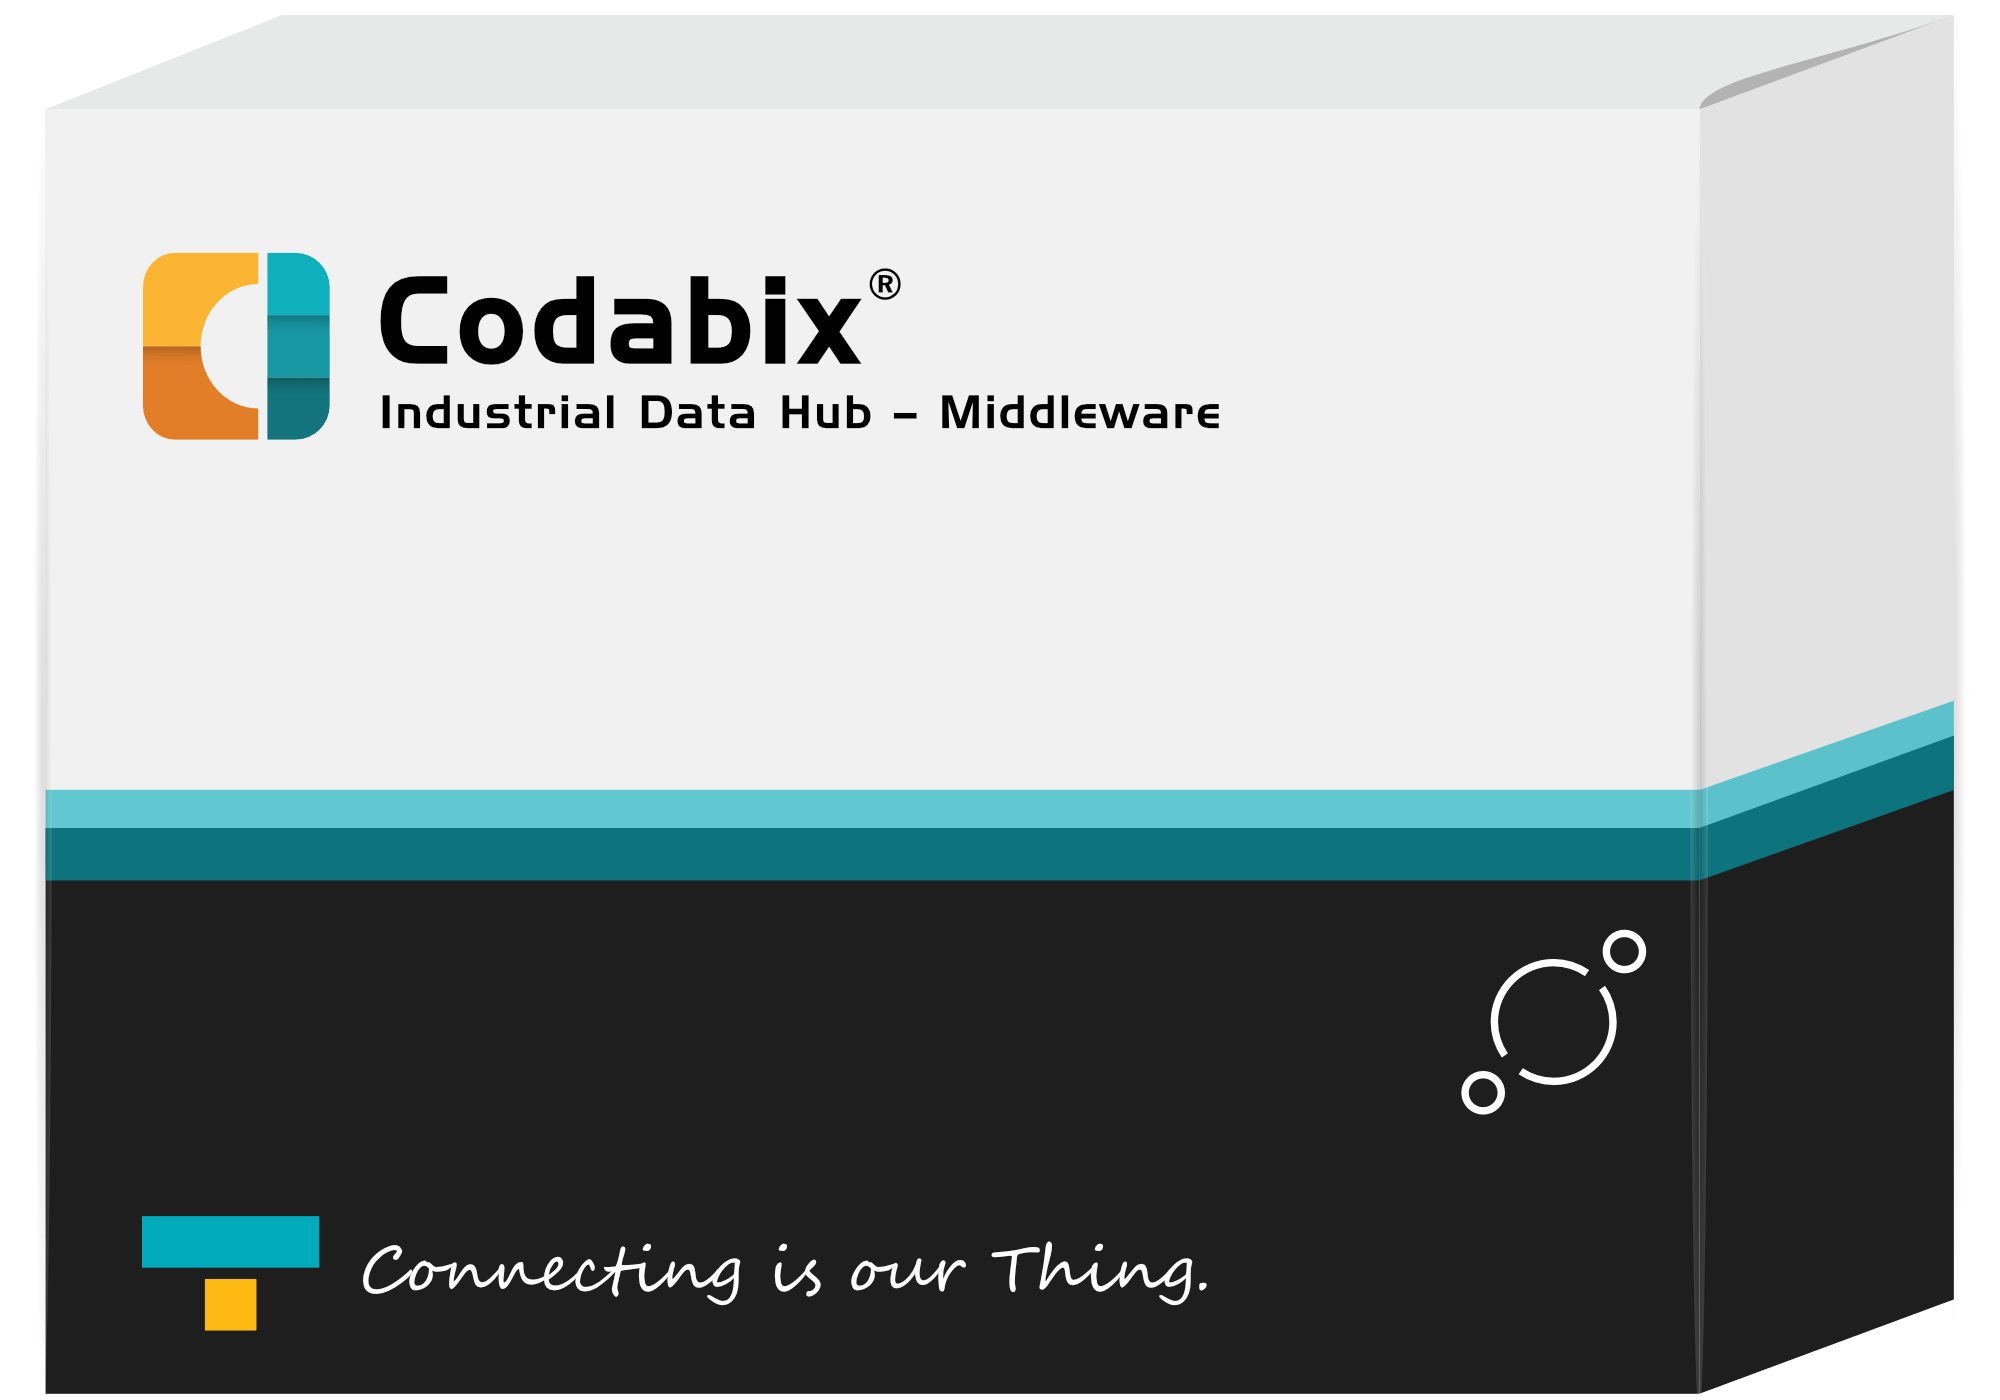 Codabix Industrial Data Hub